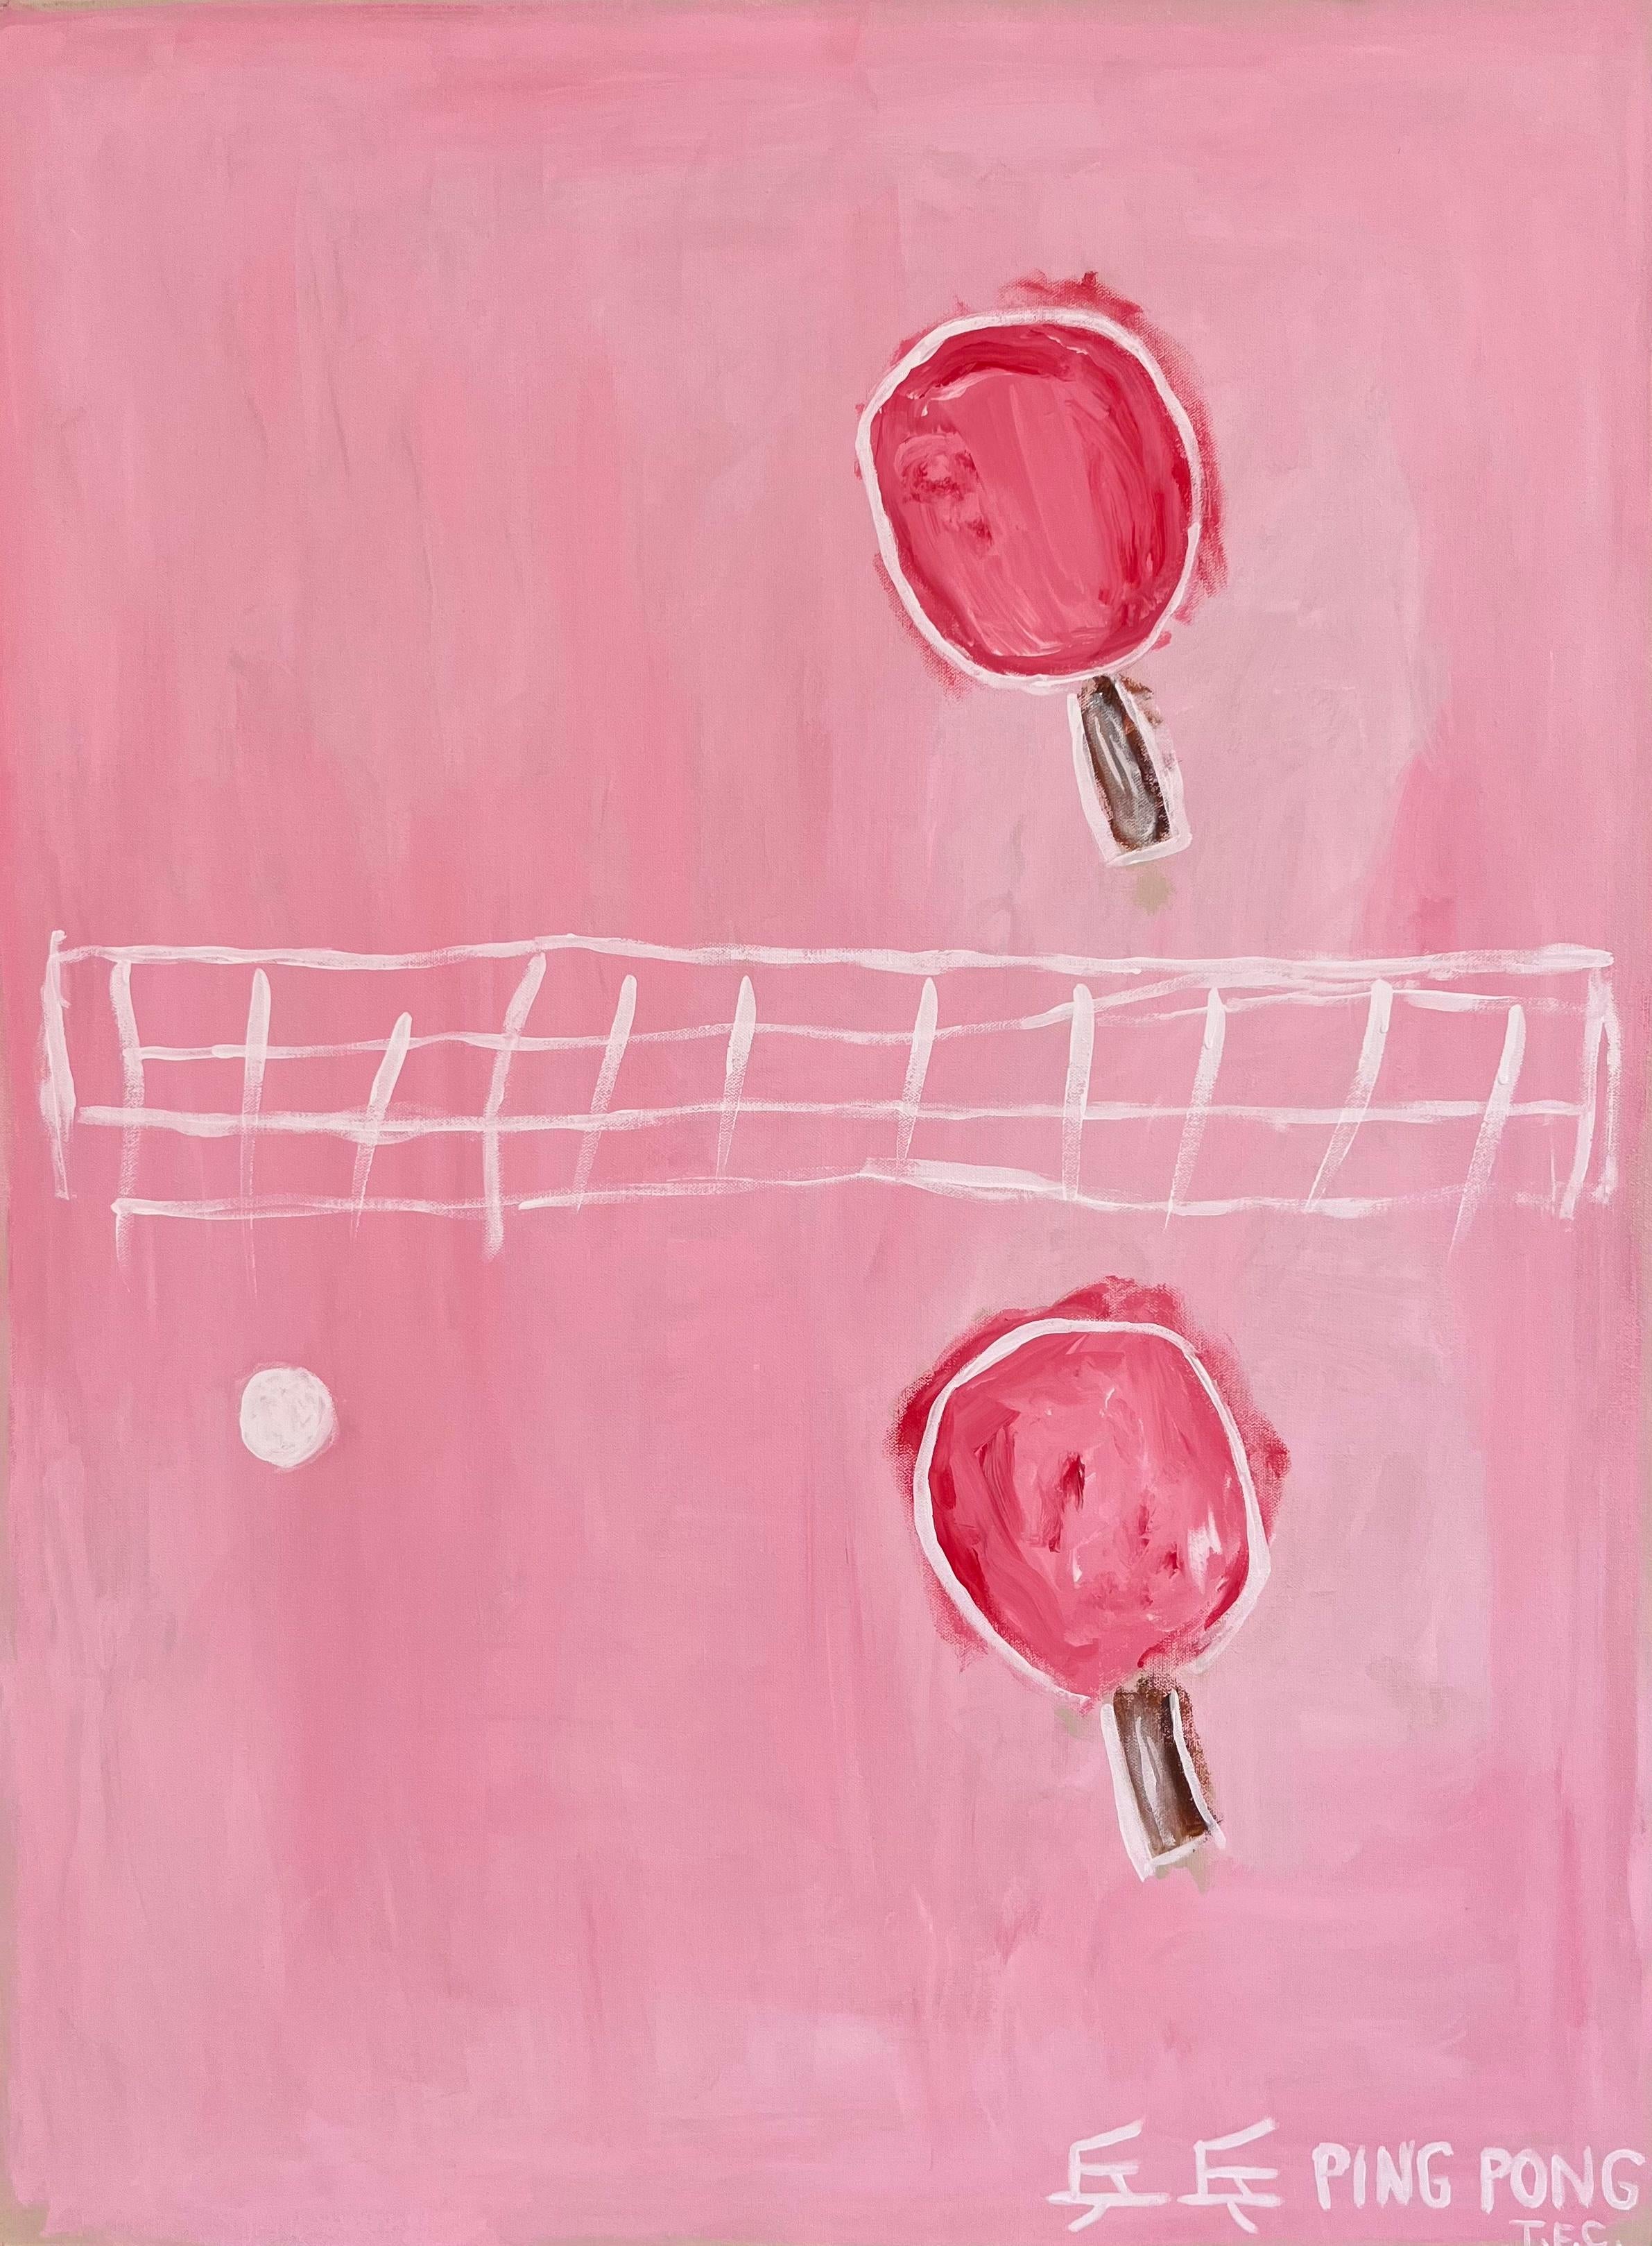 Interior Painting Tyler Casey - "Ping Pong (rose) Peinture abstraite contemporaine de Pop Art